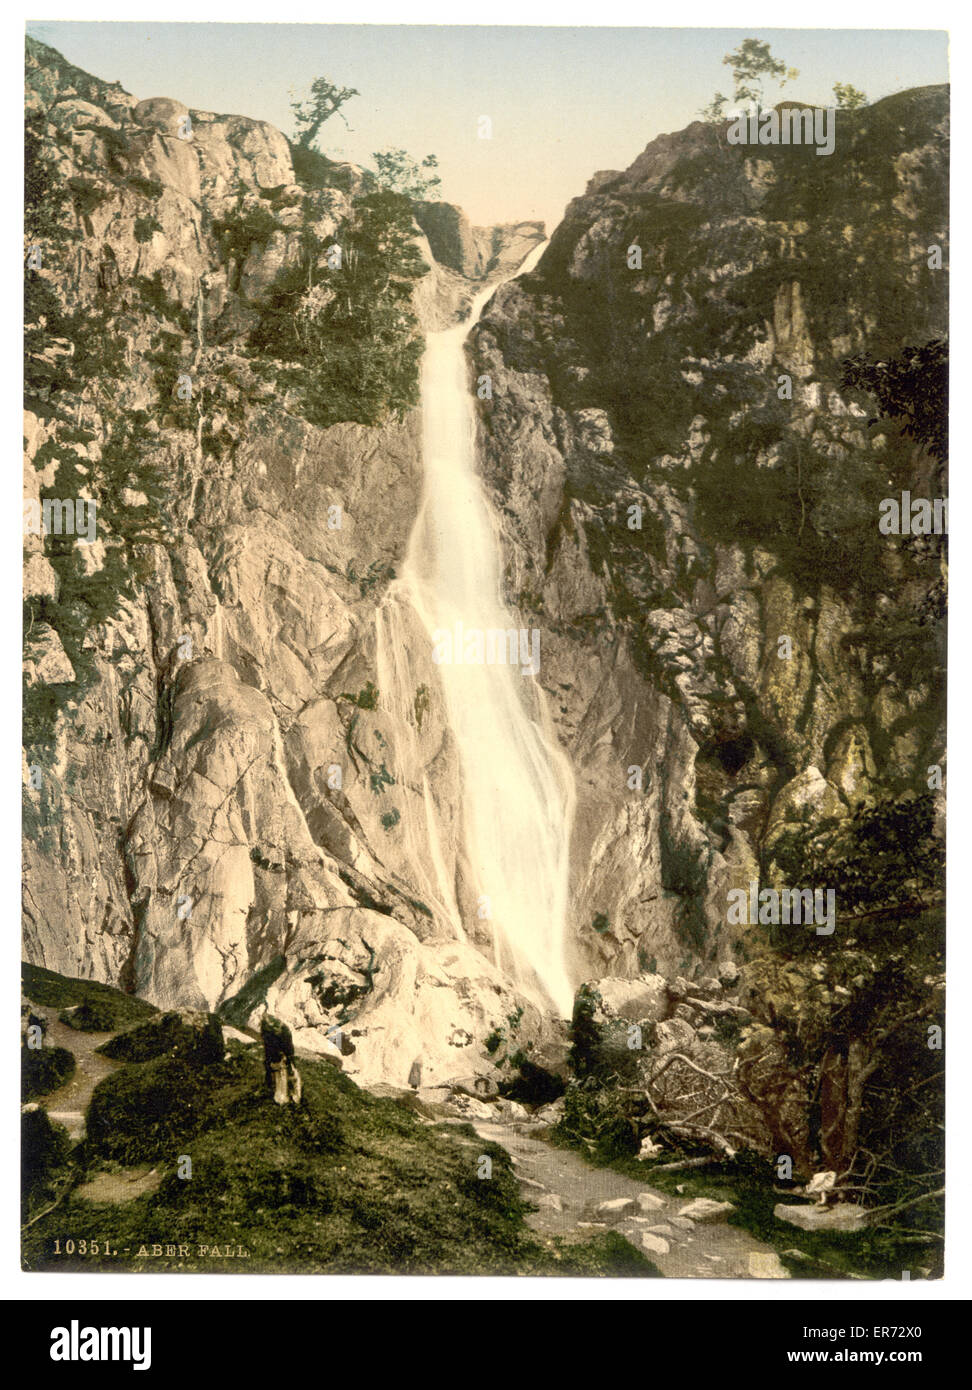 General view, Aber Falls, waterfall, Bangor, Wales late 1890s Stock Photo